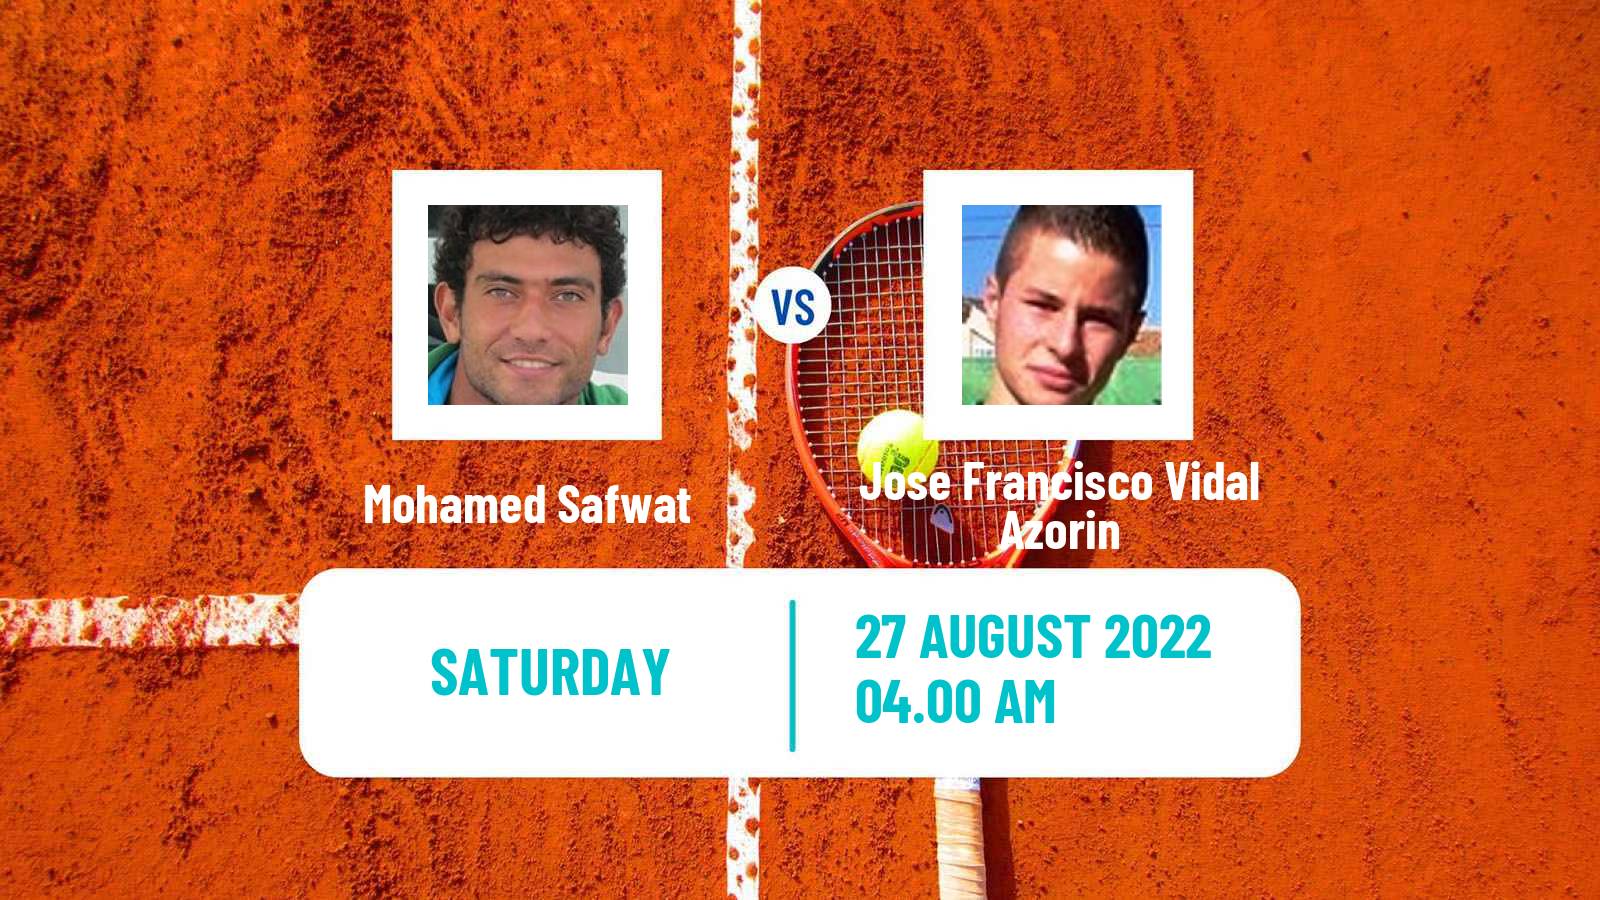 Tennis ITF Tournaments Mohamed Safwat - Jose Francisco Vidal Azorin